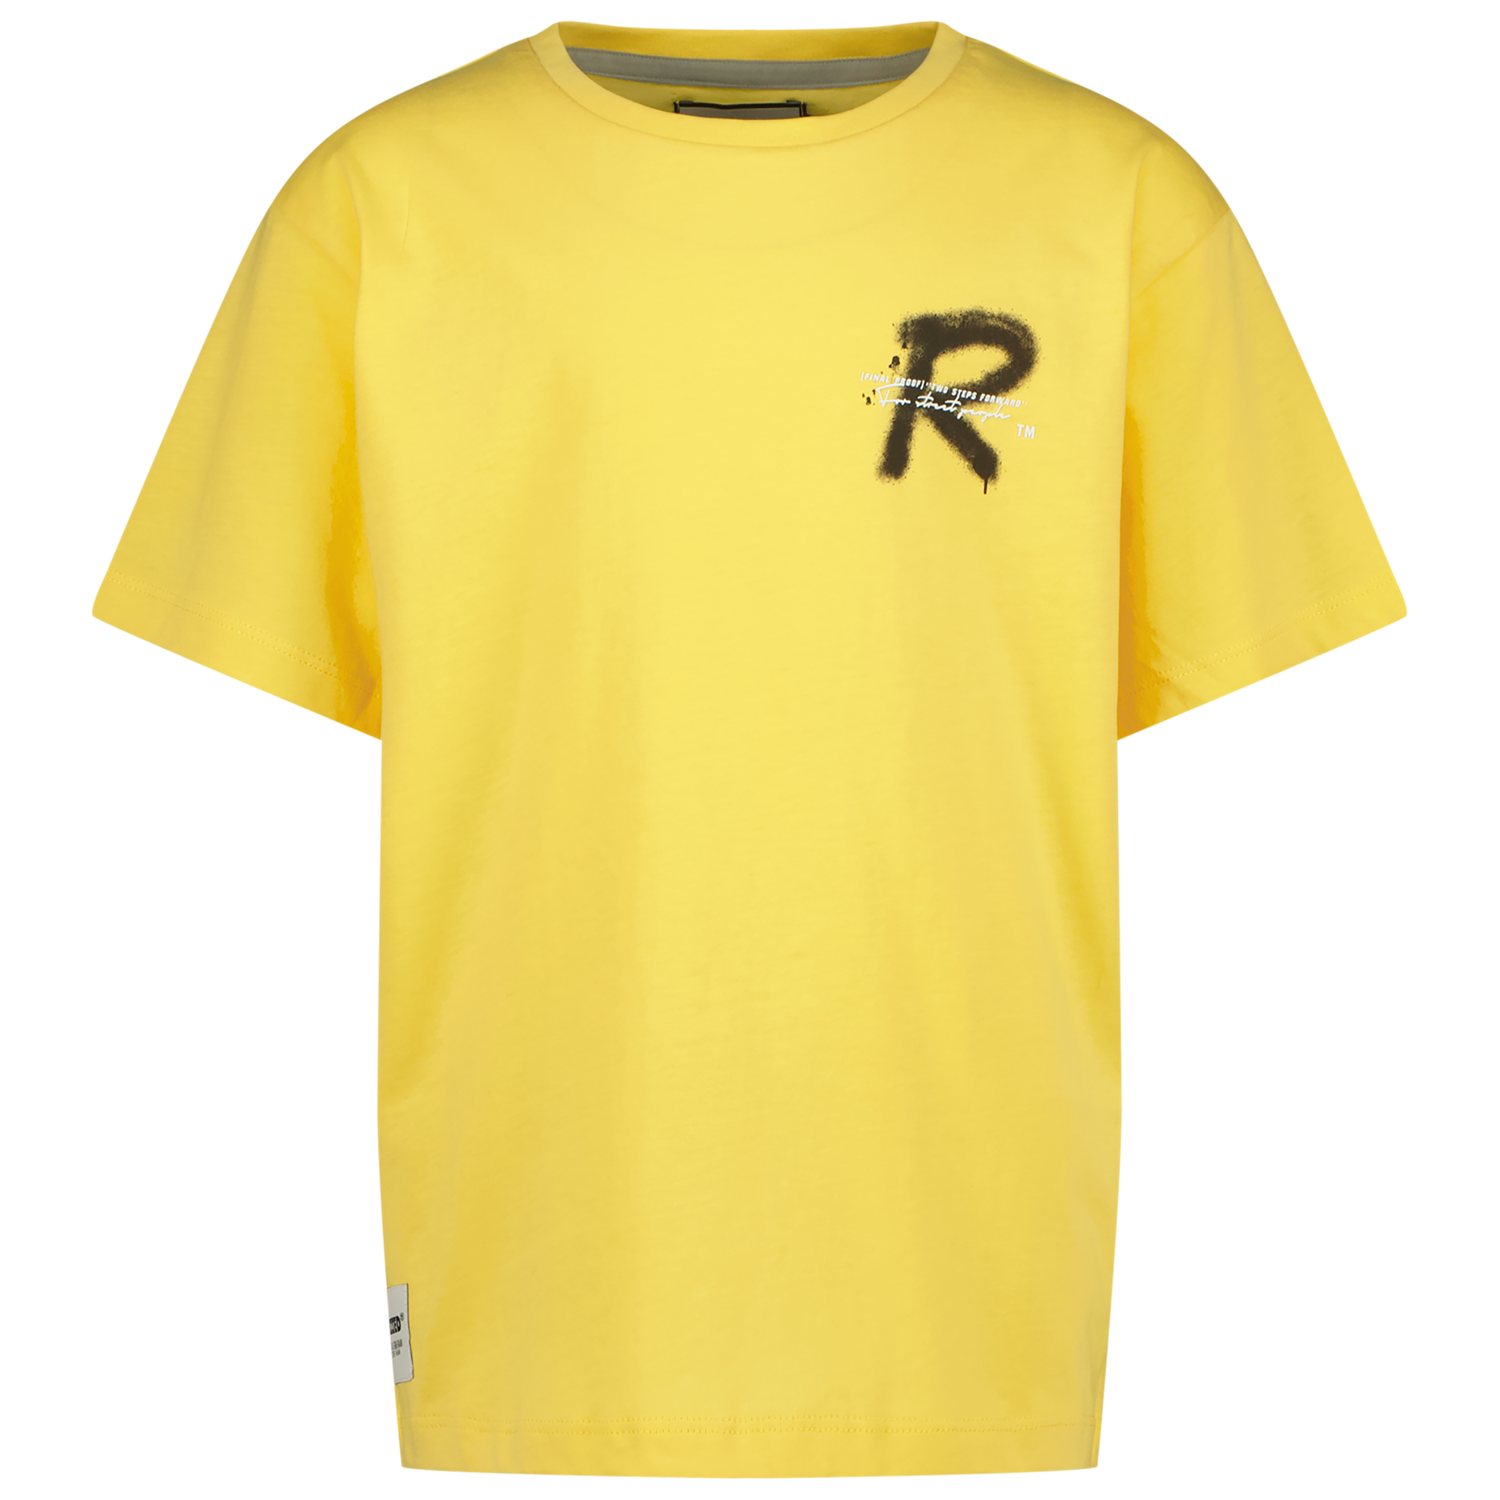 Raizzed Shirt